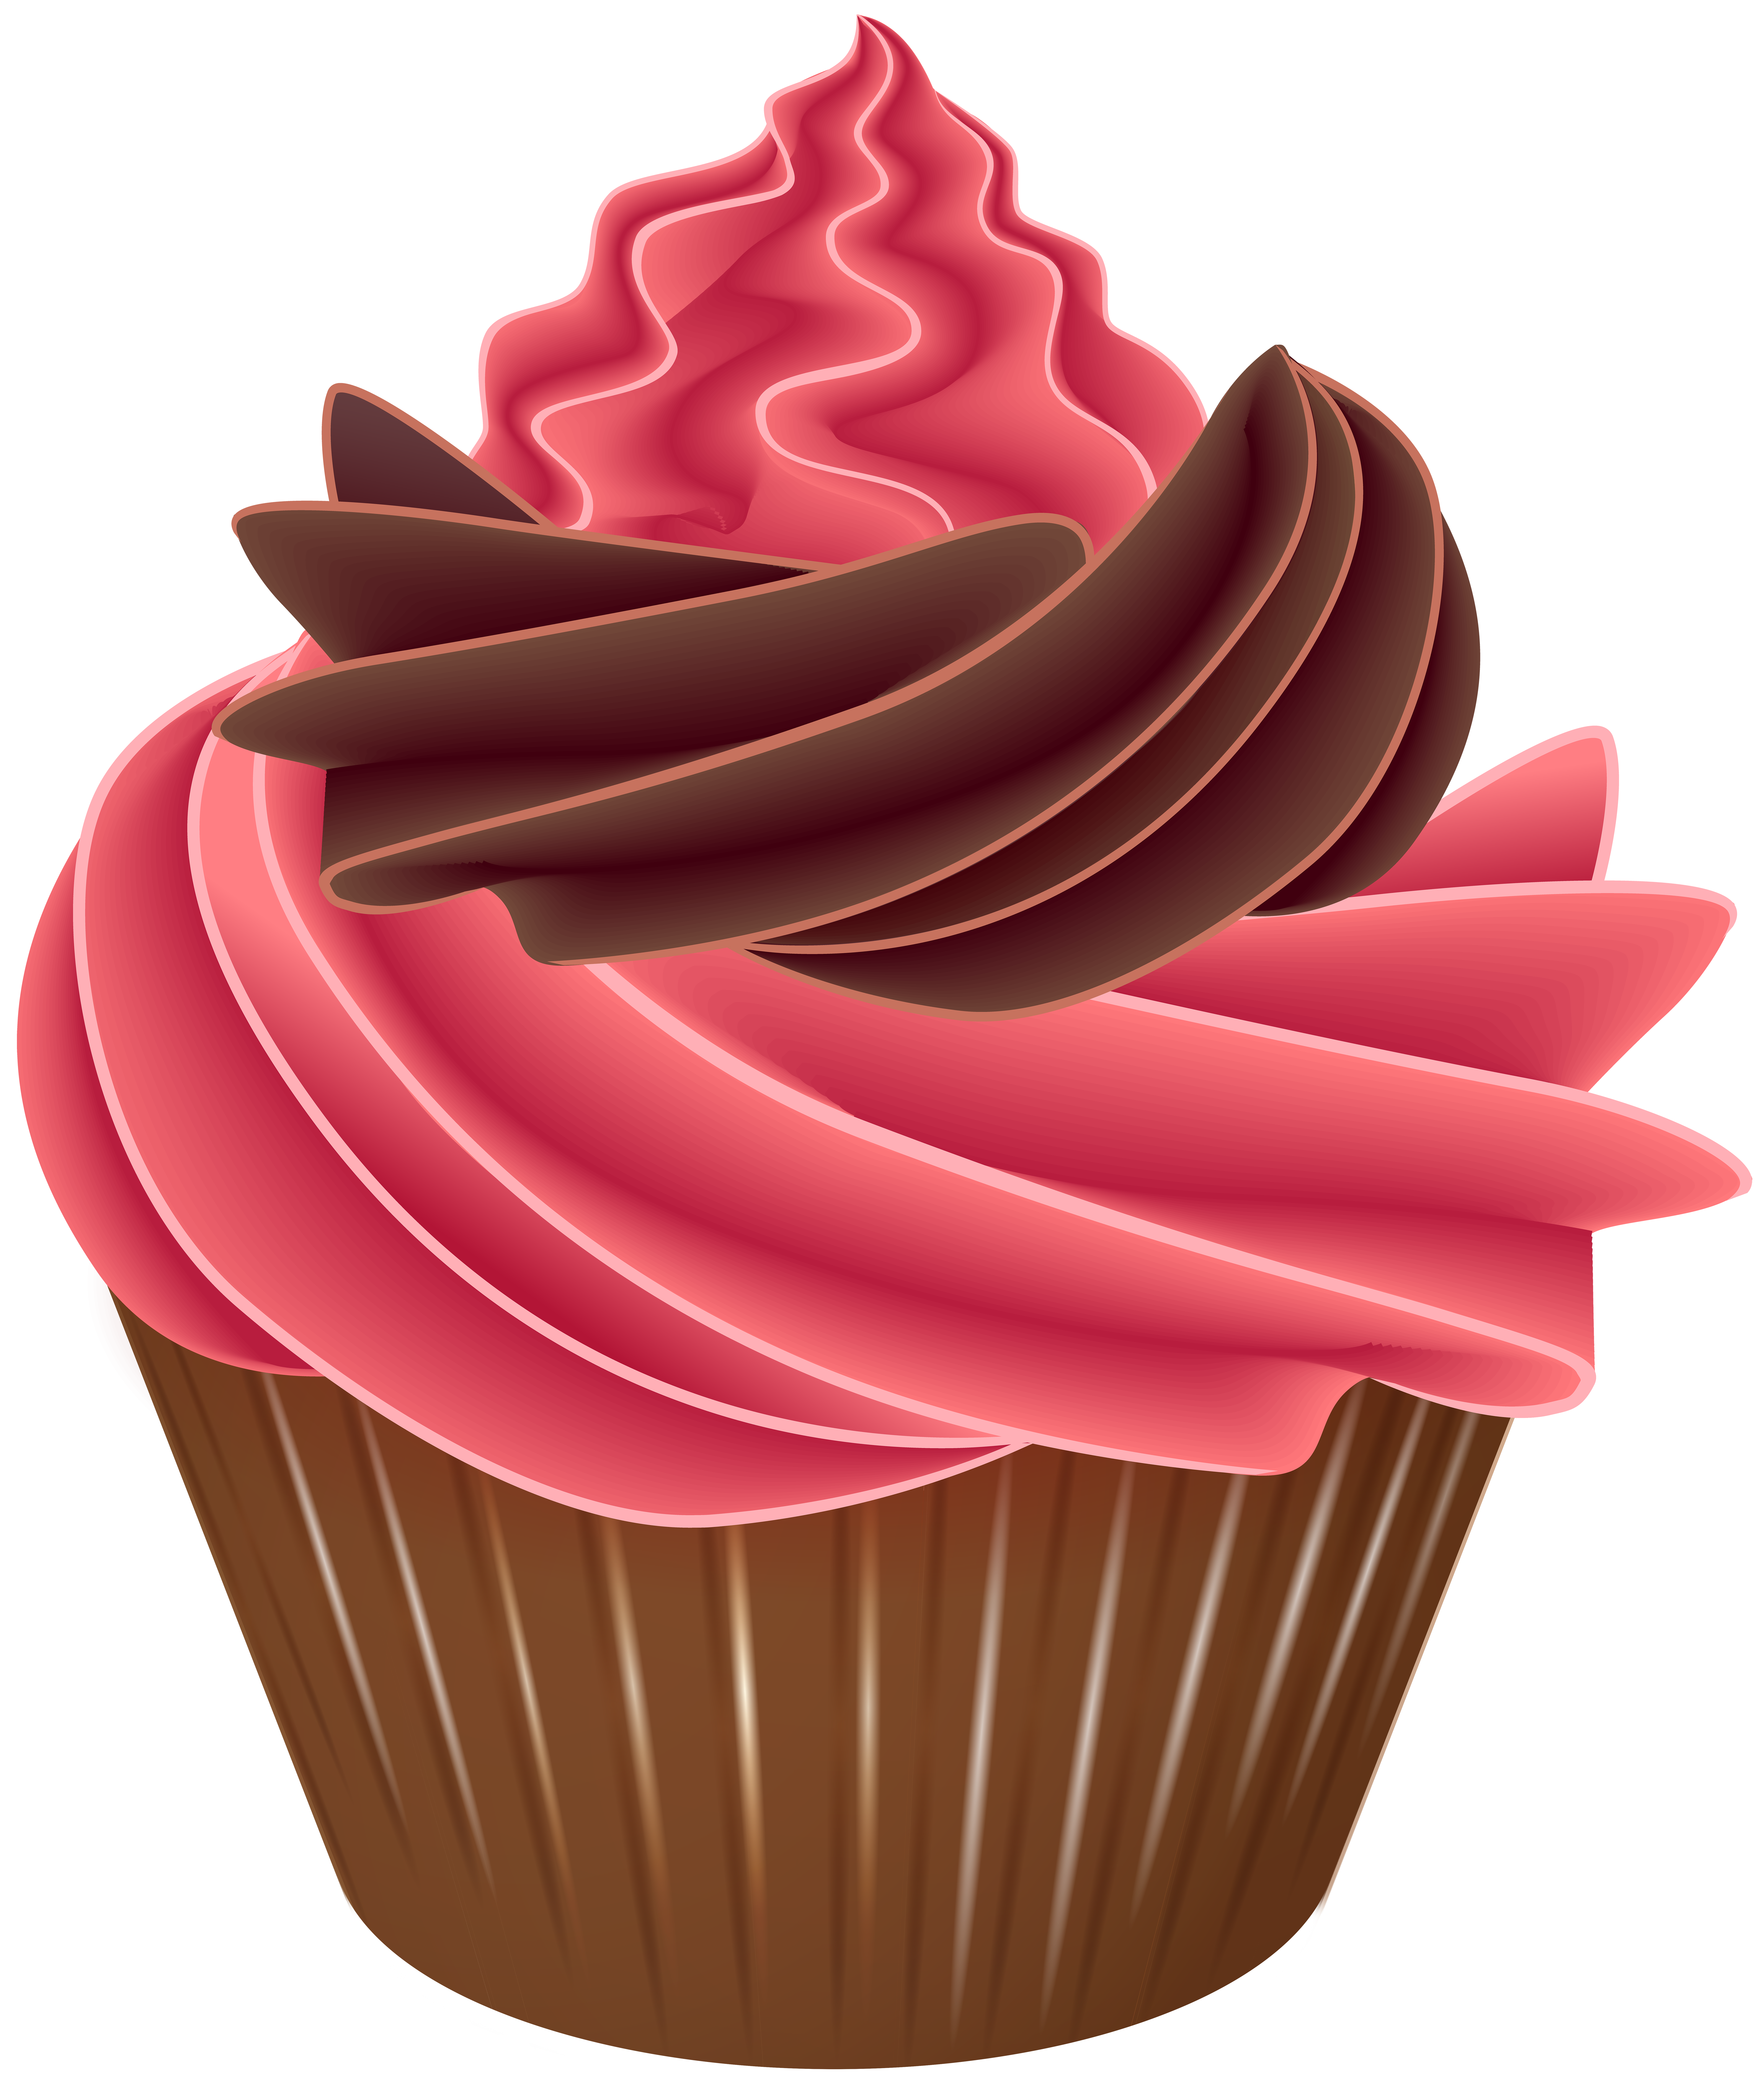 Cupcake PNG Clip Art Image.